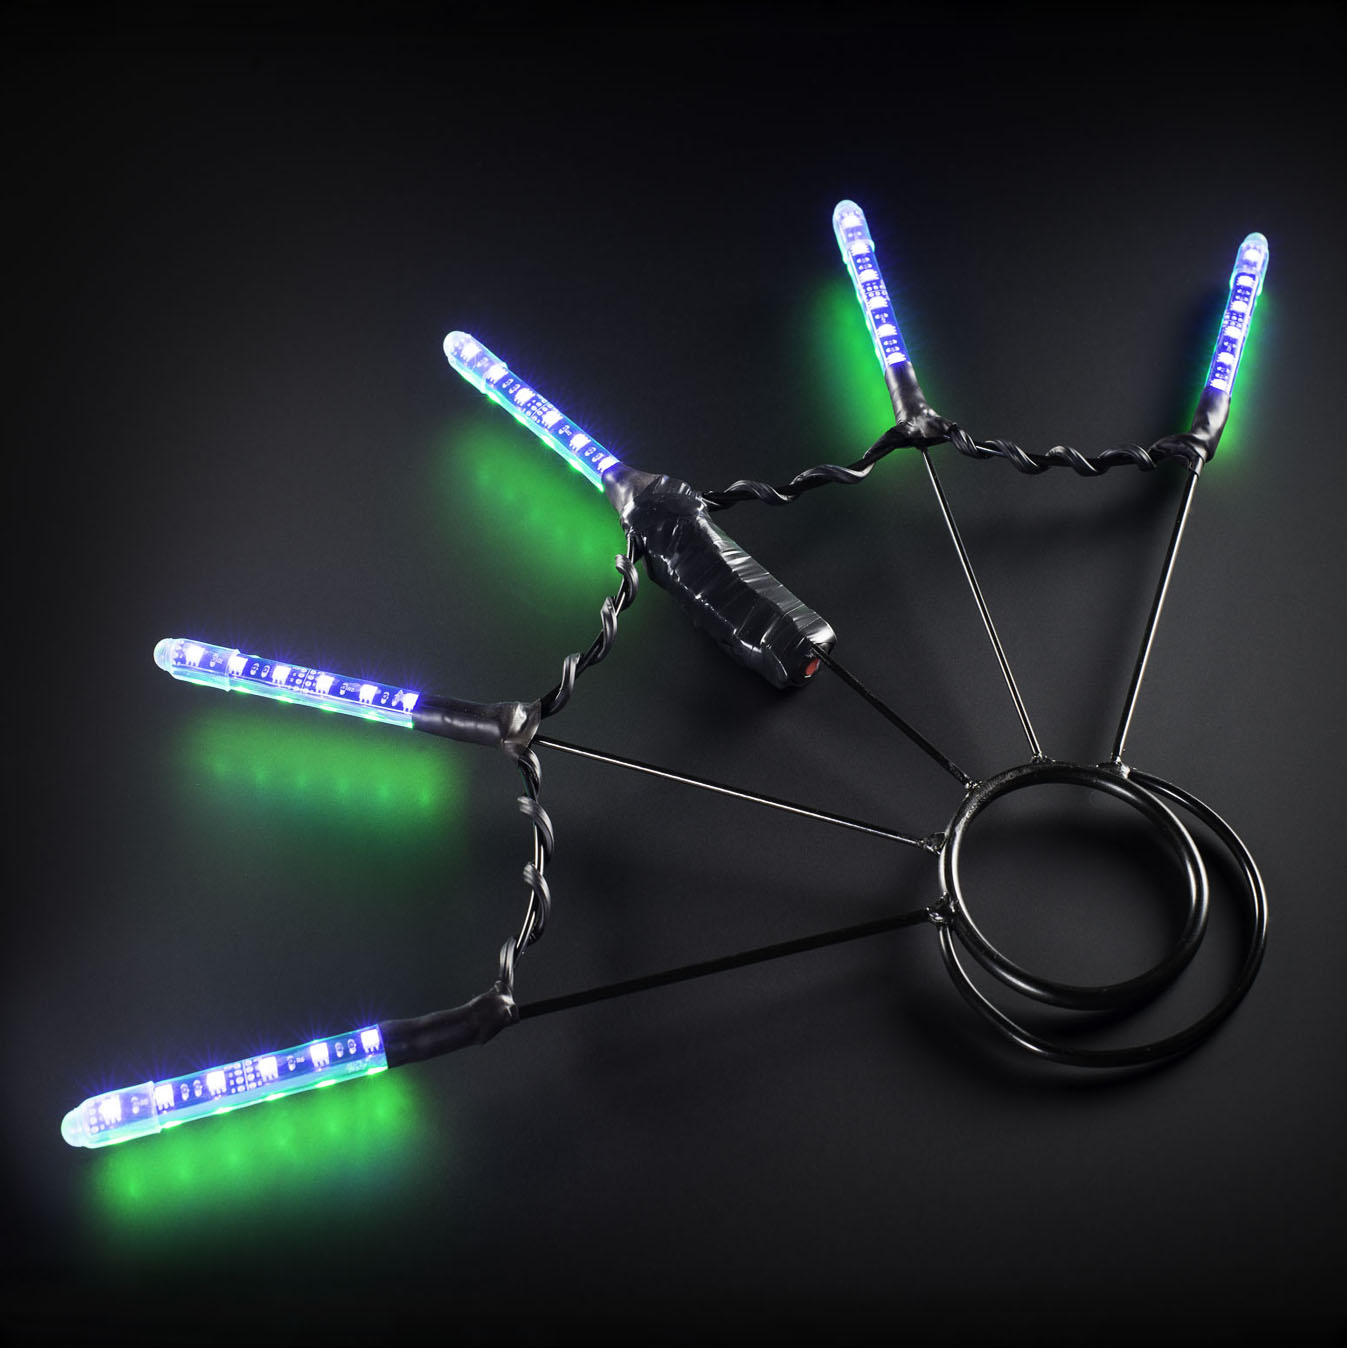 møl renere emulering LED Fans - Pyroterra Lighttoys